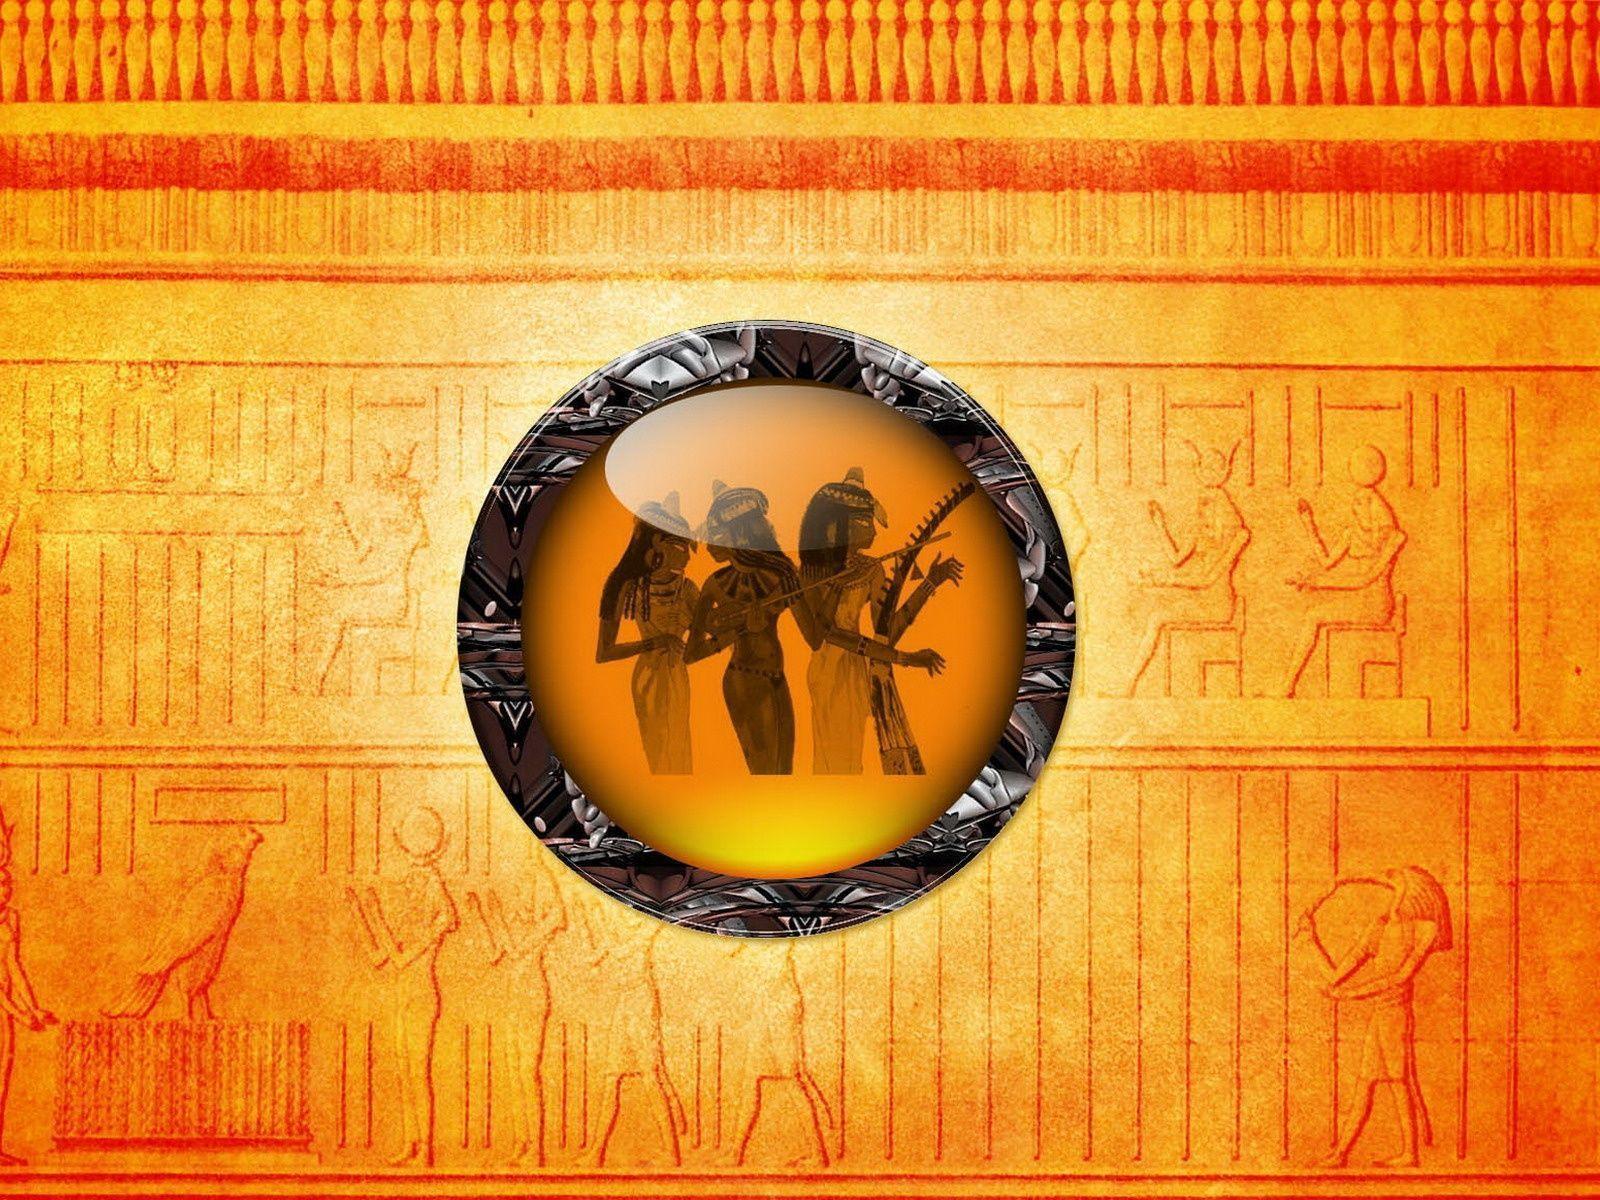 Egyptian Background